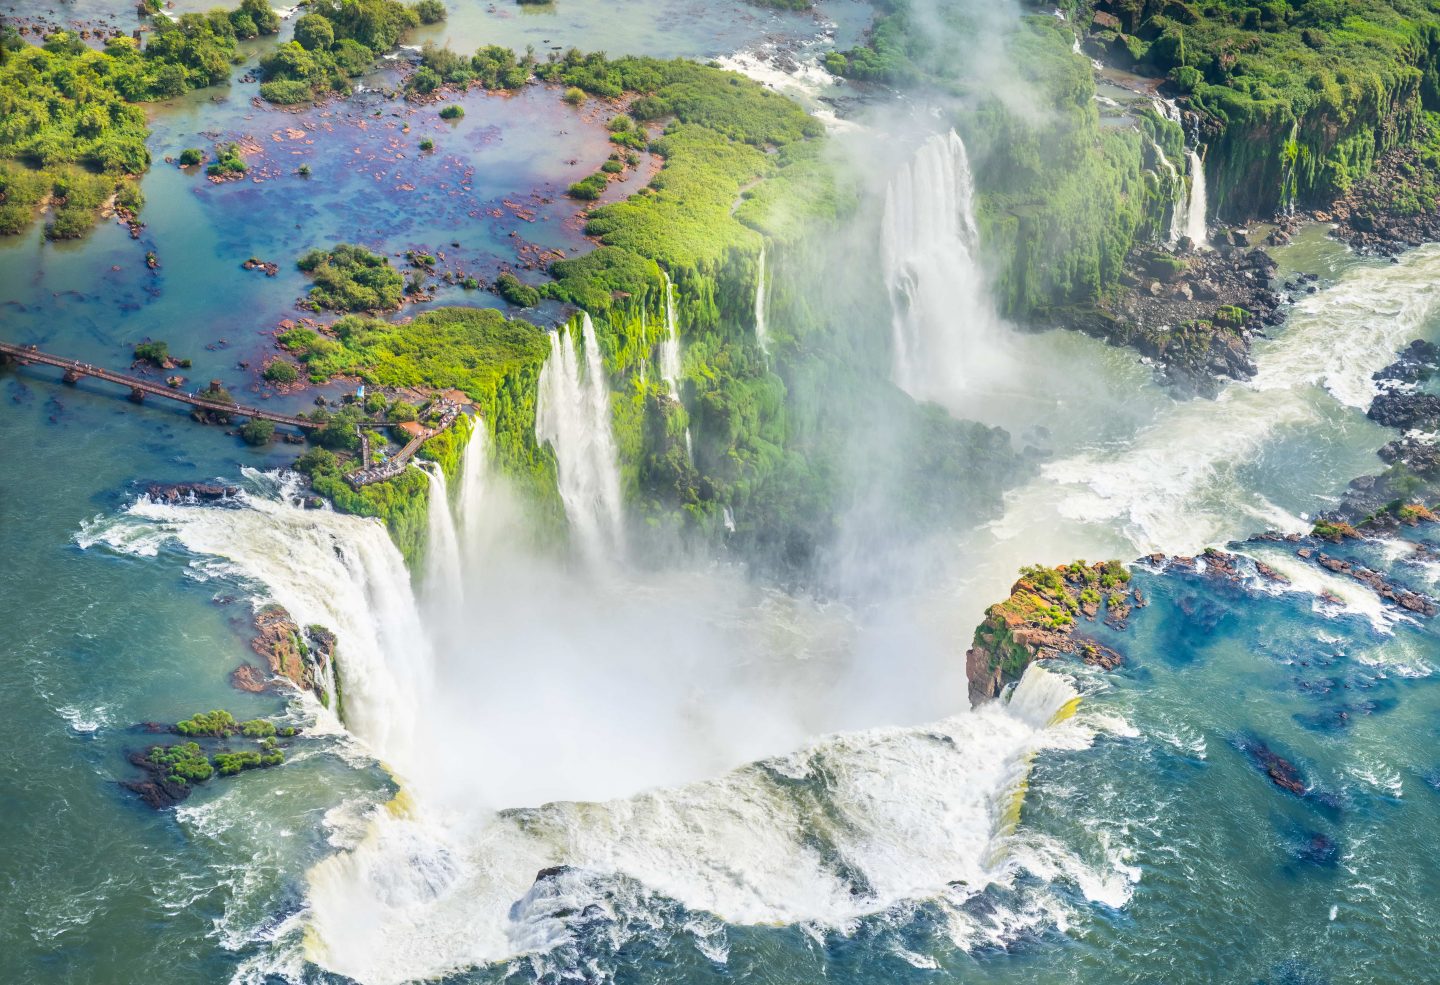 The spectacular Iguazu Falls in Argentina and Brazil